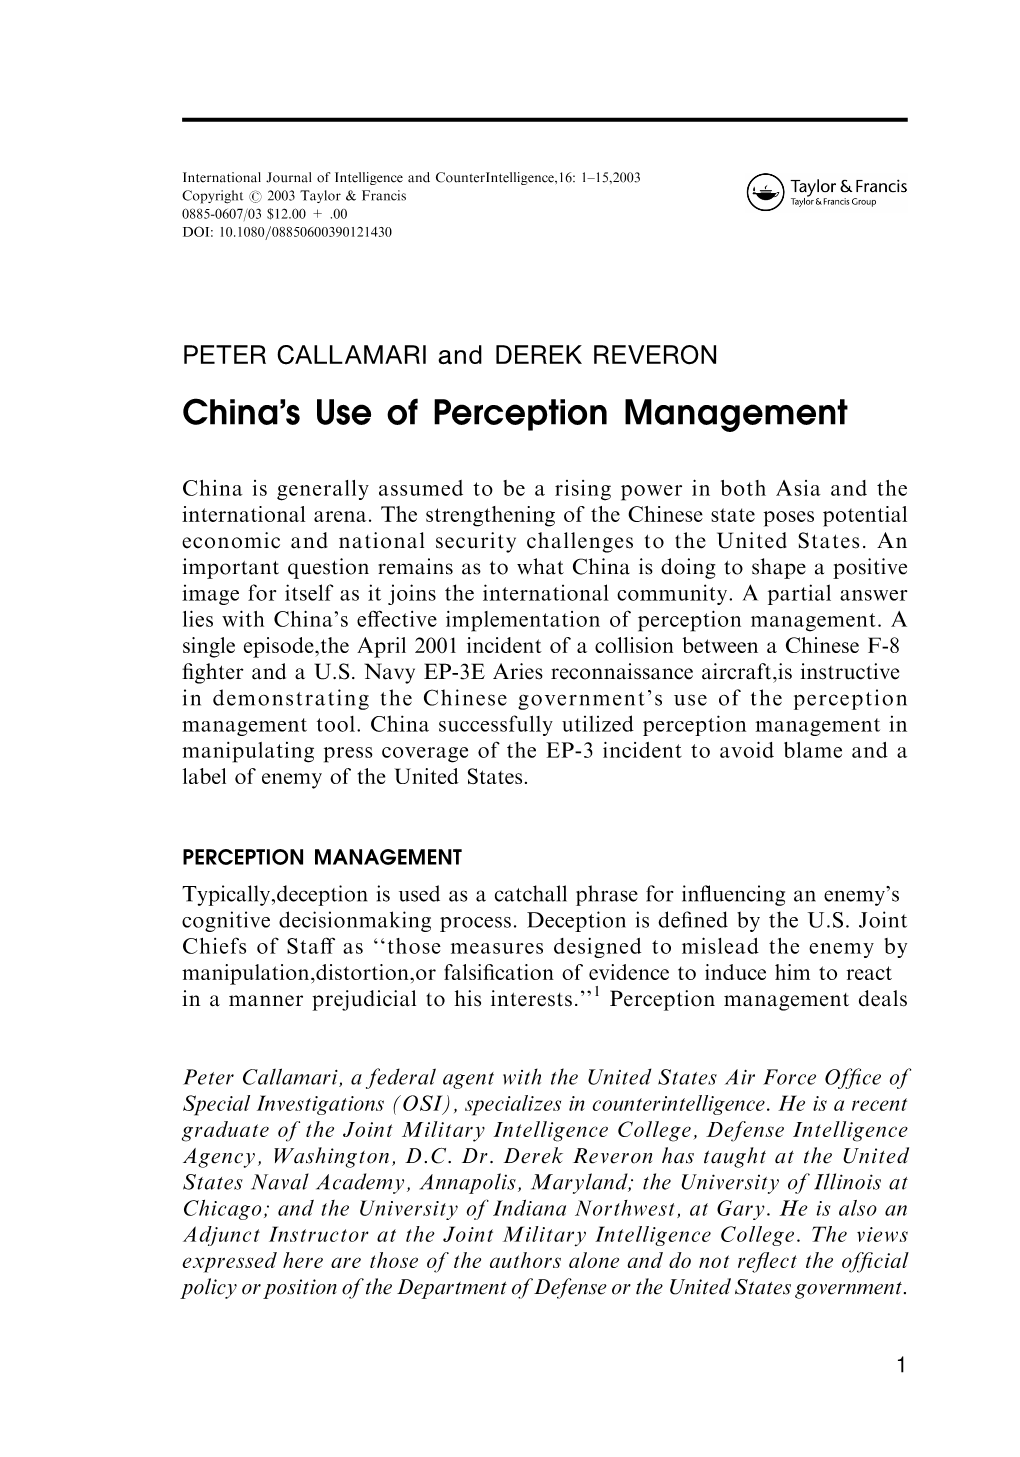 China's Use of Perception Management